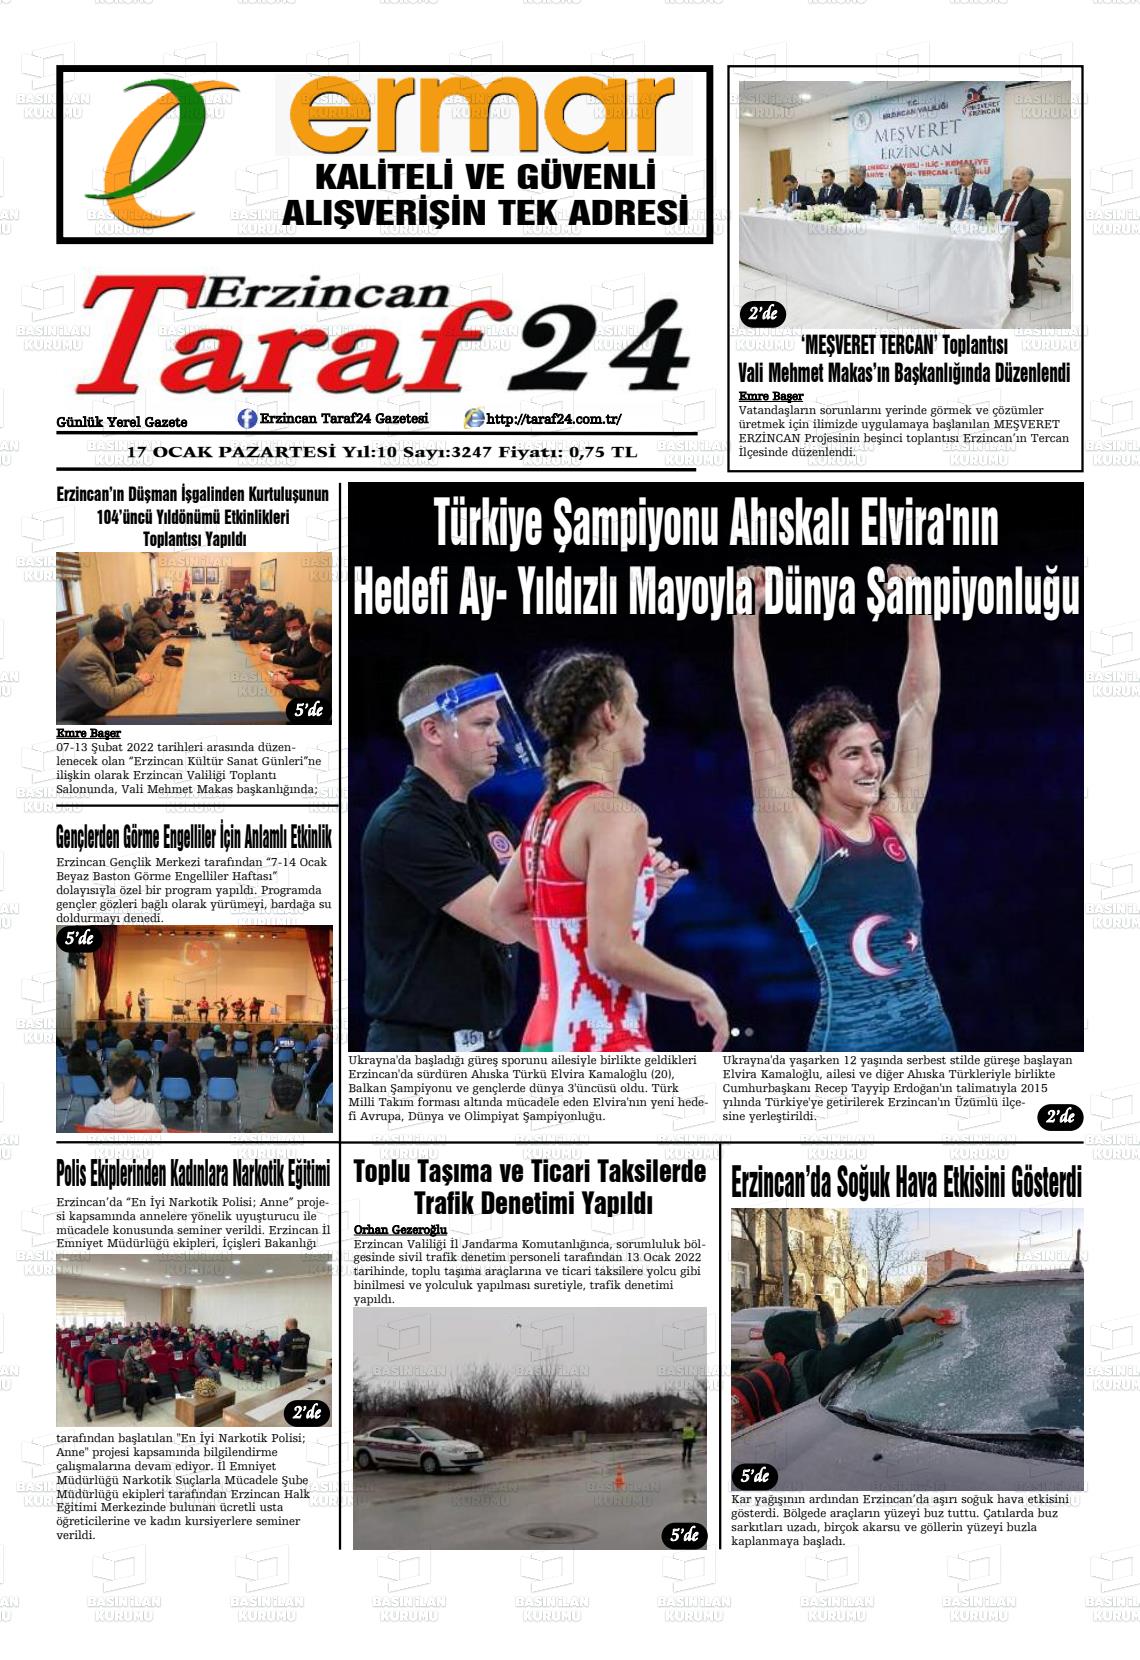 17 Ocak 2022 Erzincan Taraf 24 Gazete Manşeti